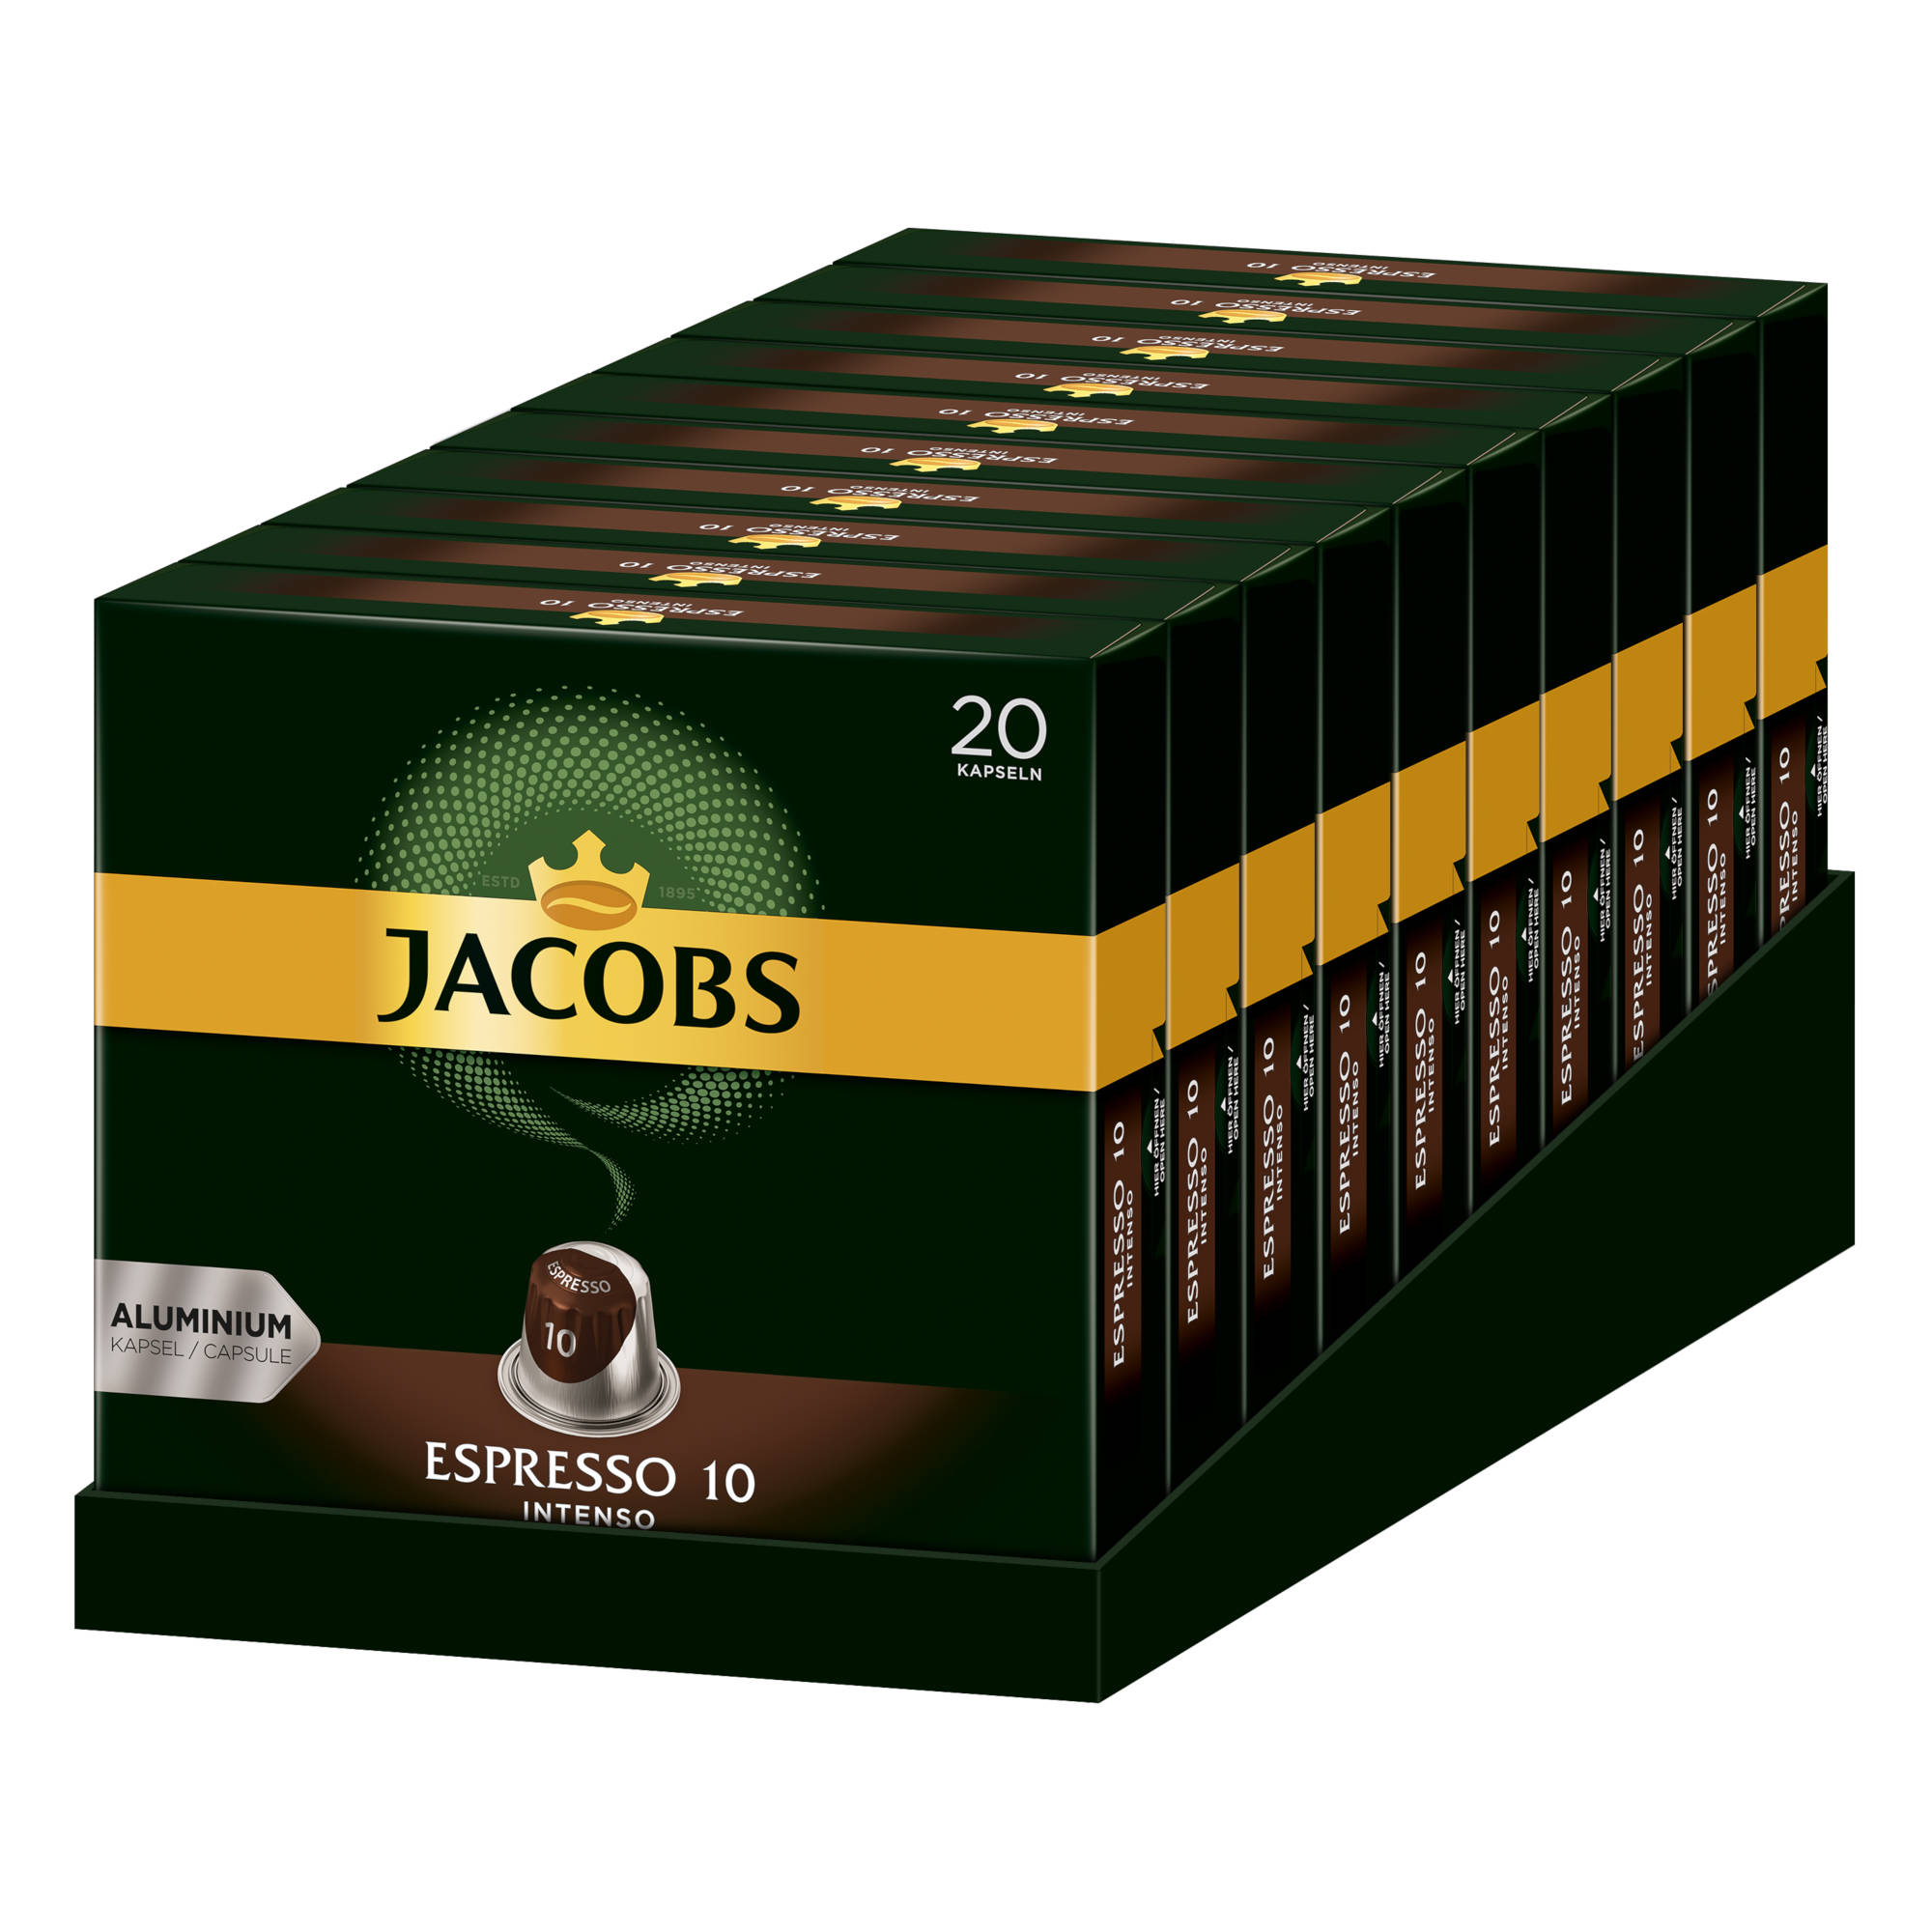 10 x kompatible JACOBS 20 10 Intenso Espresso Kaffeekapseln Nespresso®* (Nespresso System)